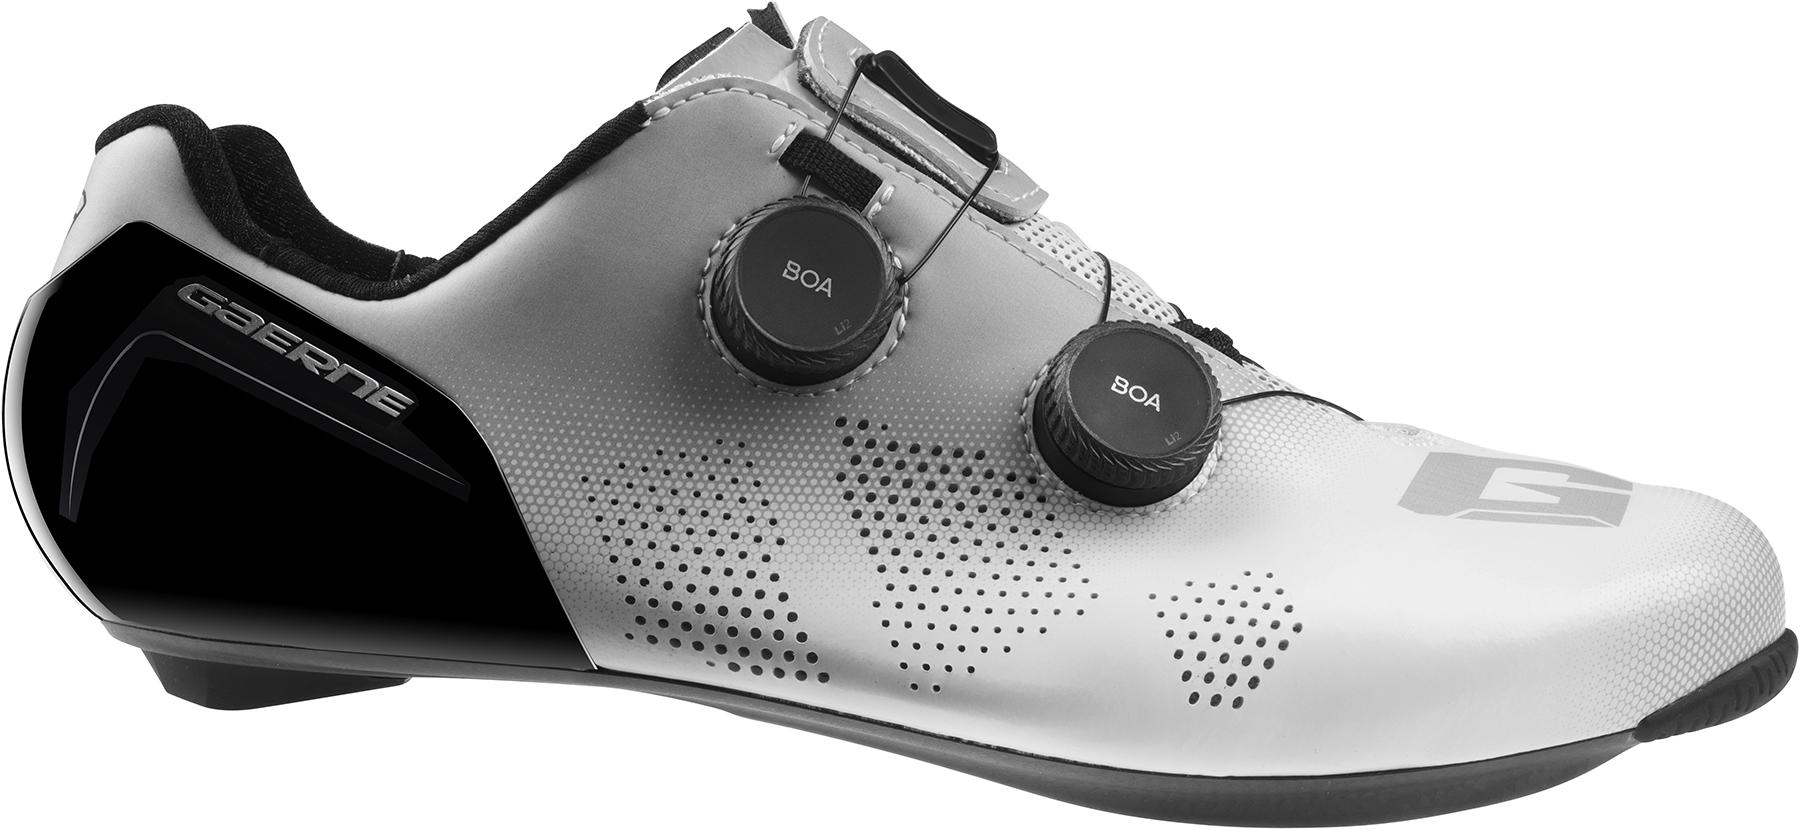 Gaerne Carbon G.stl Shoes - White